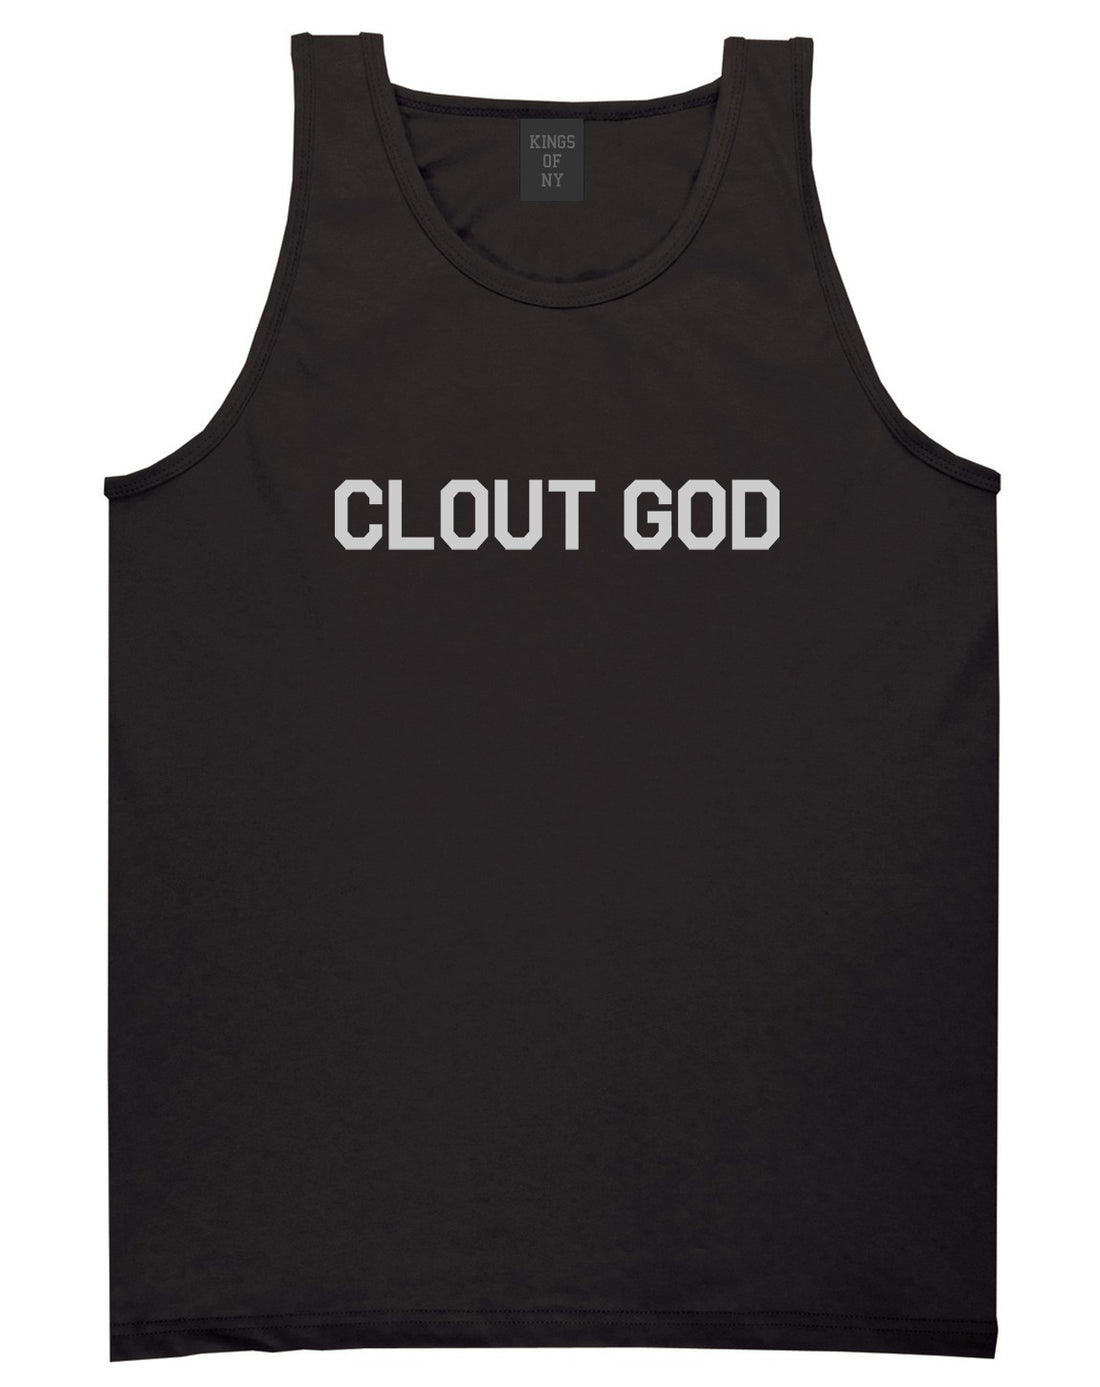 Clout God Mens Tank Top Shirt Black by Kings Of NY